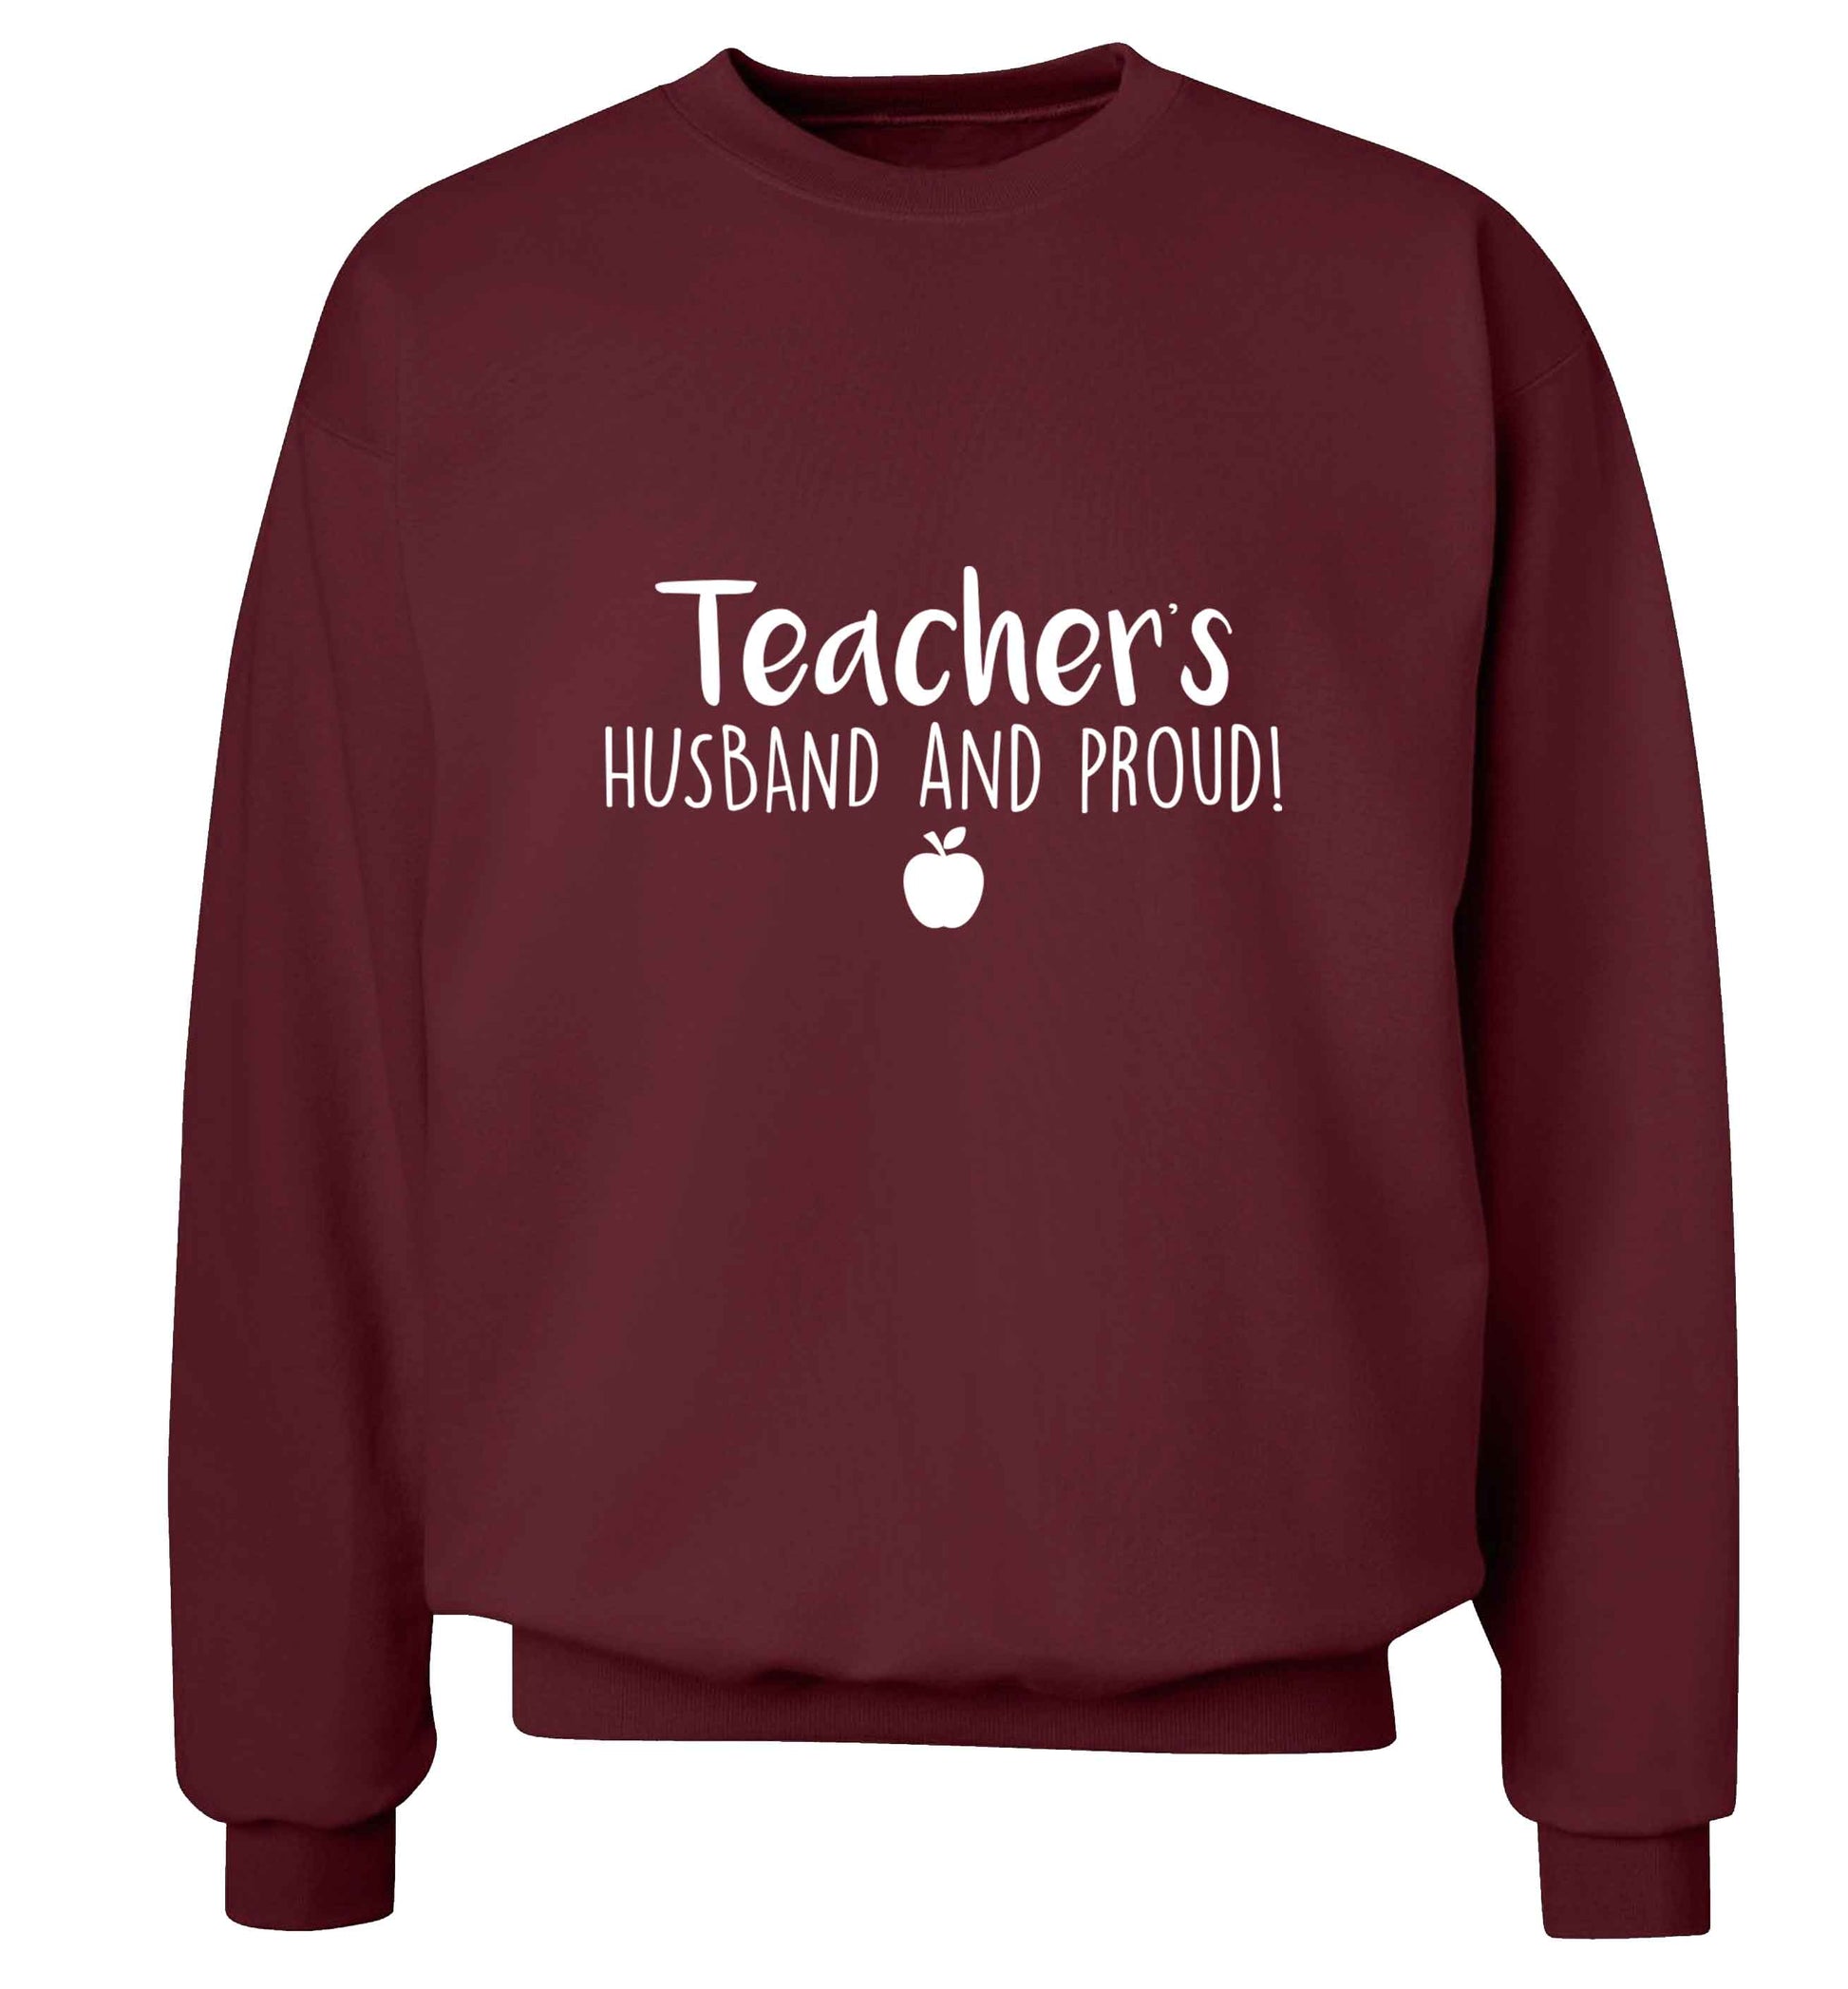 Teachers husband and proud adult's unisex maroon sweater 2XL